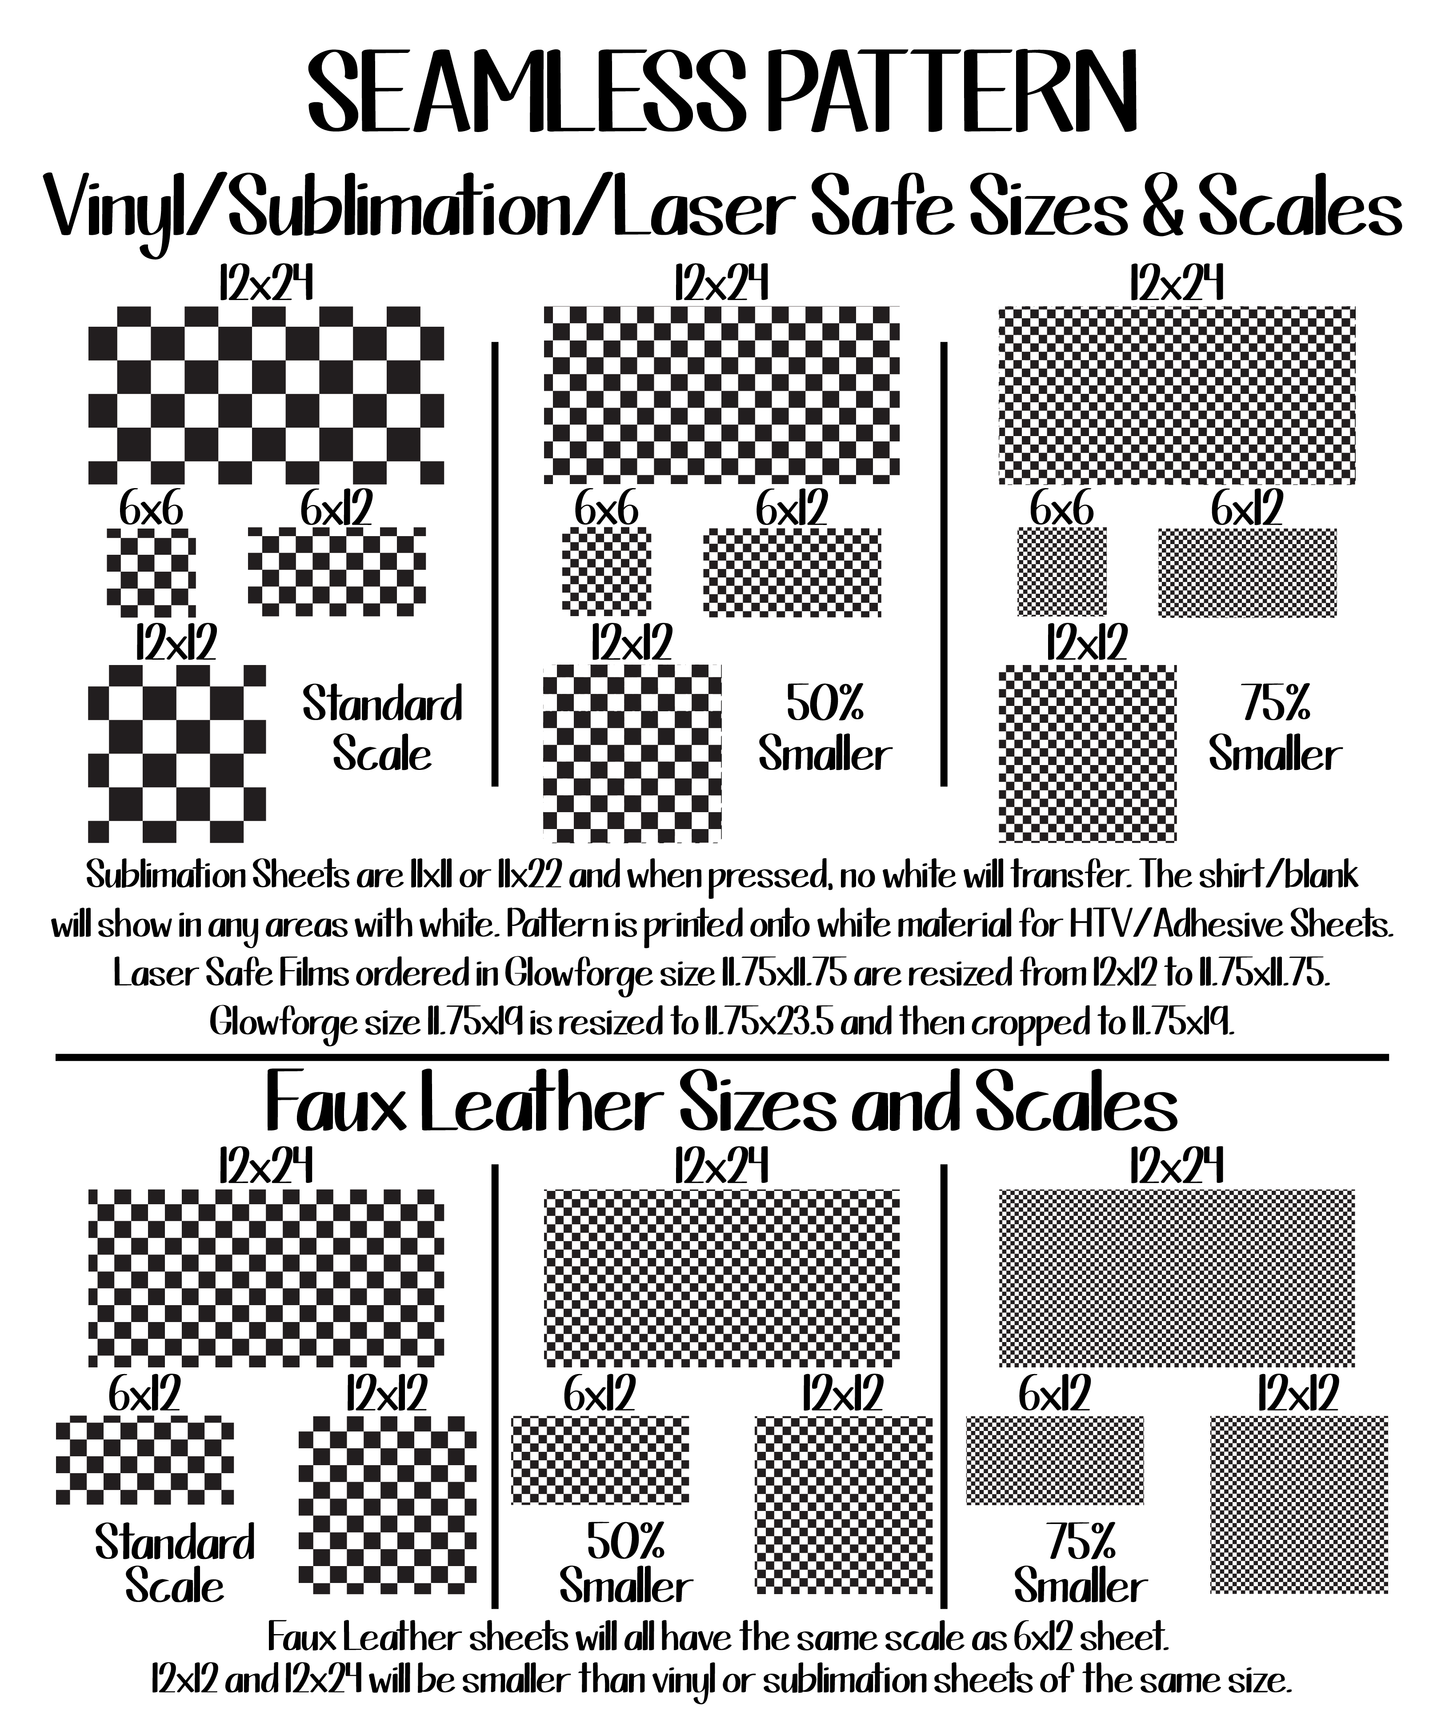 Halloween Cheetah ★ Pattern Vinyl | Faux Leather | Sublimation (TAT 3 BUS DAYS)